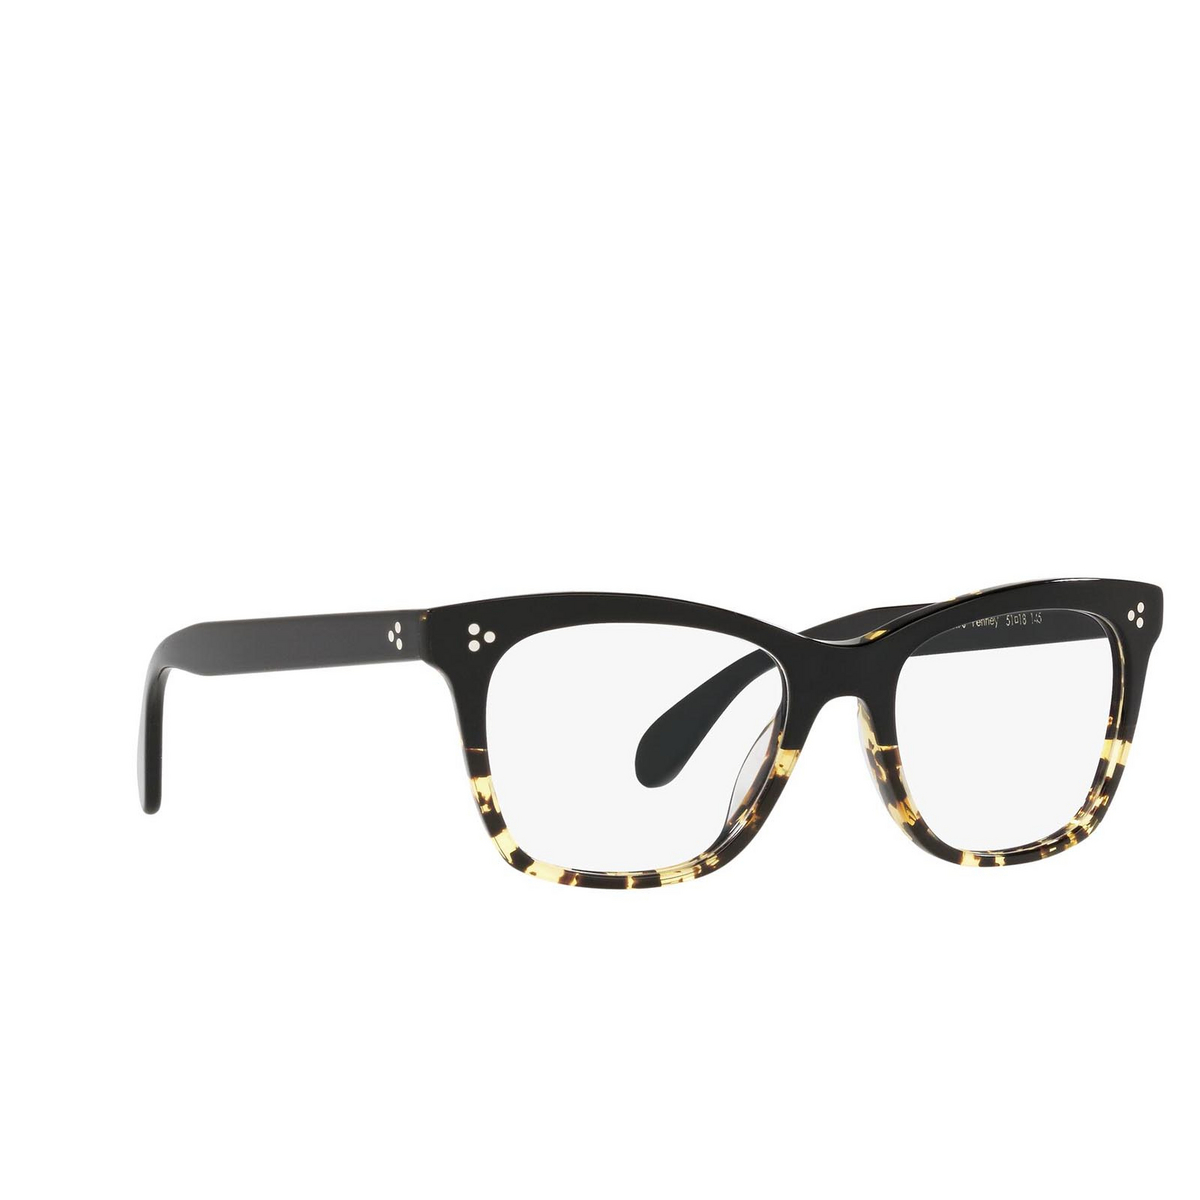 Oliver Peoples® Butterfly Eyeglasses: Penney OV5375U color Black / Dtbk Gradient 1178 - three-quarters view.